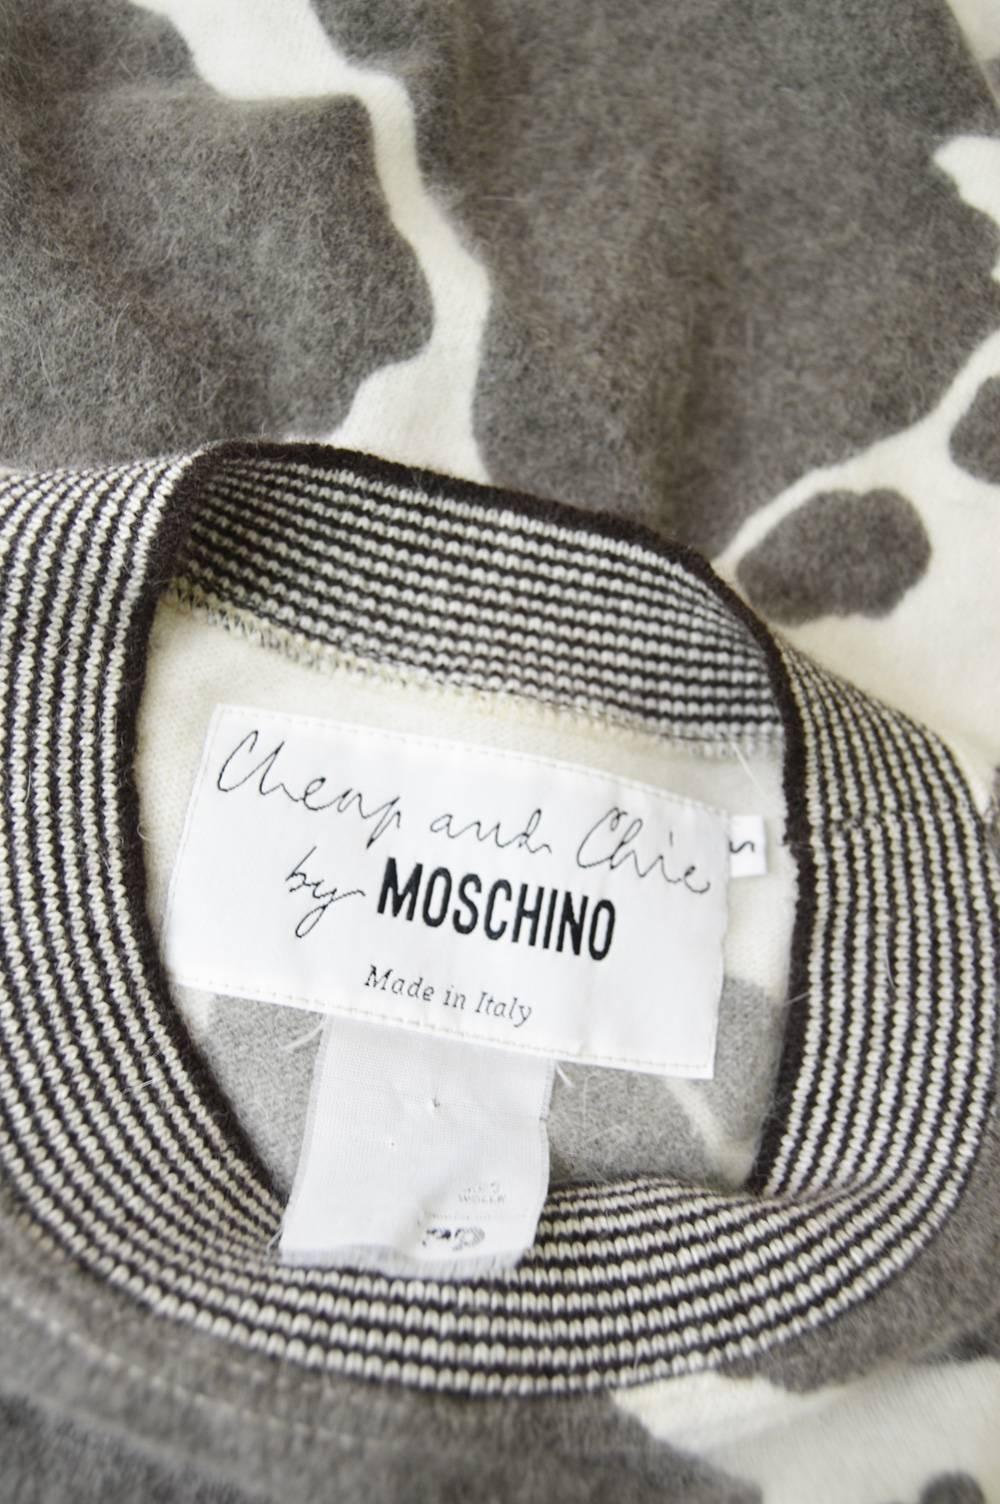 Gray Moschino Vintage 'Muu..schino' Cow Print Fuzzy Knit White Sweater Dress, 1980s